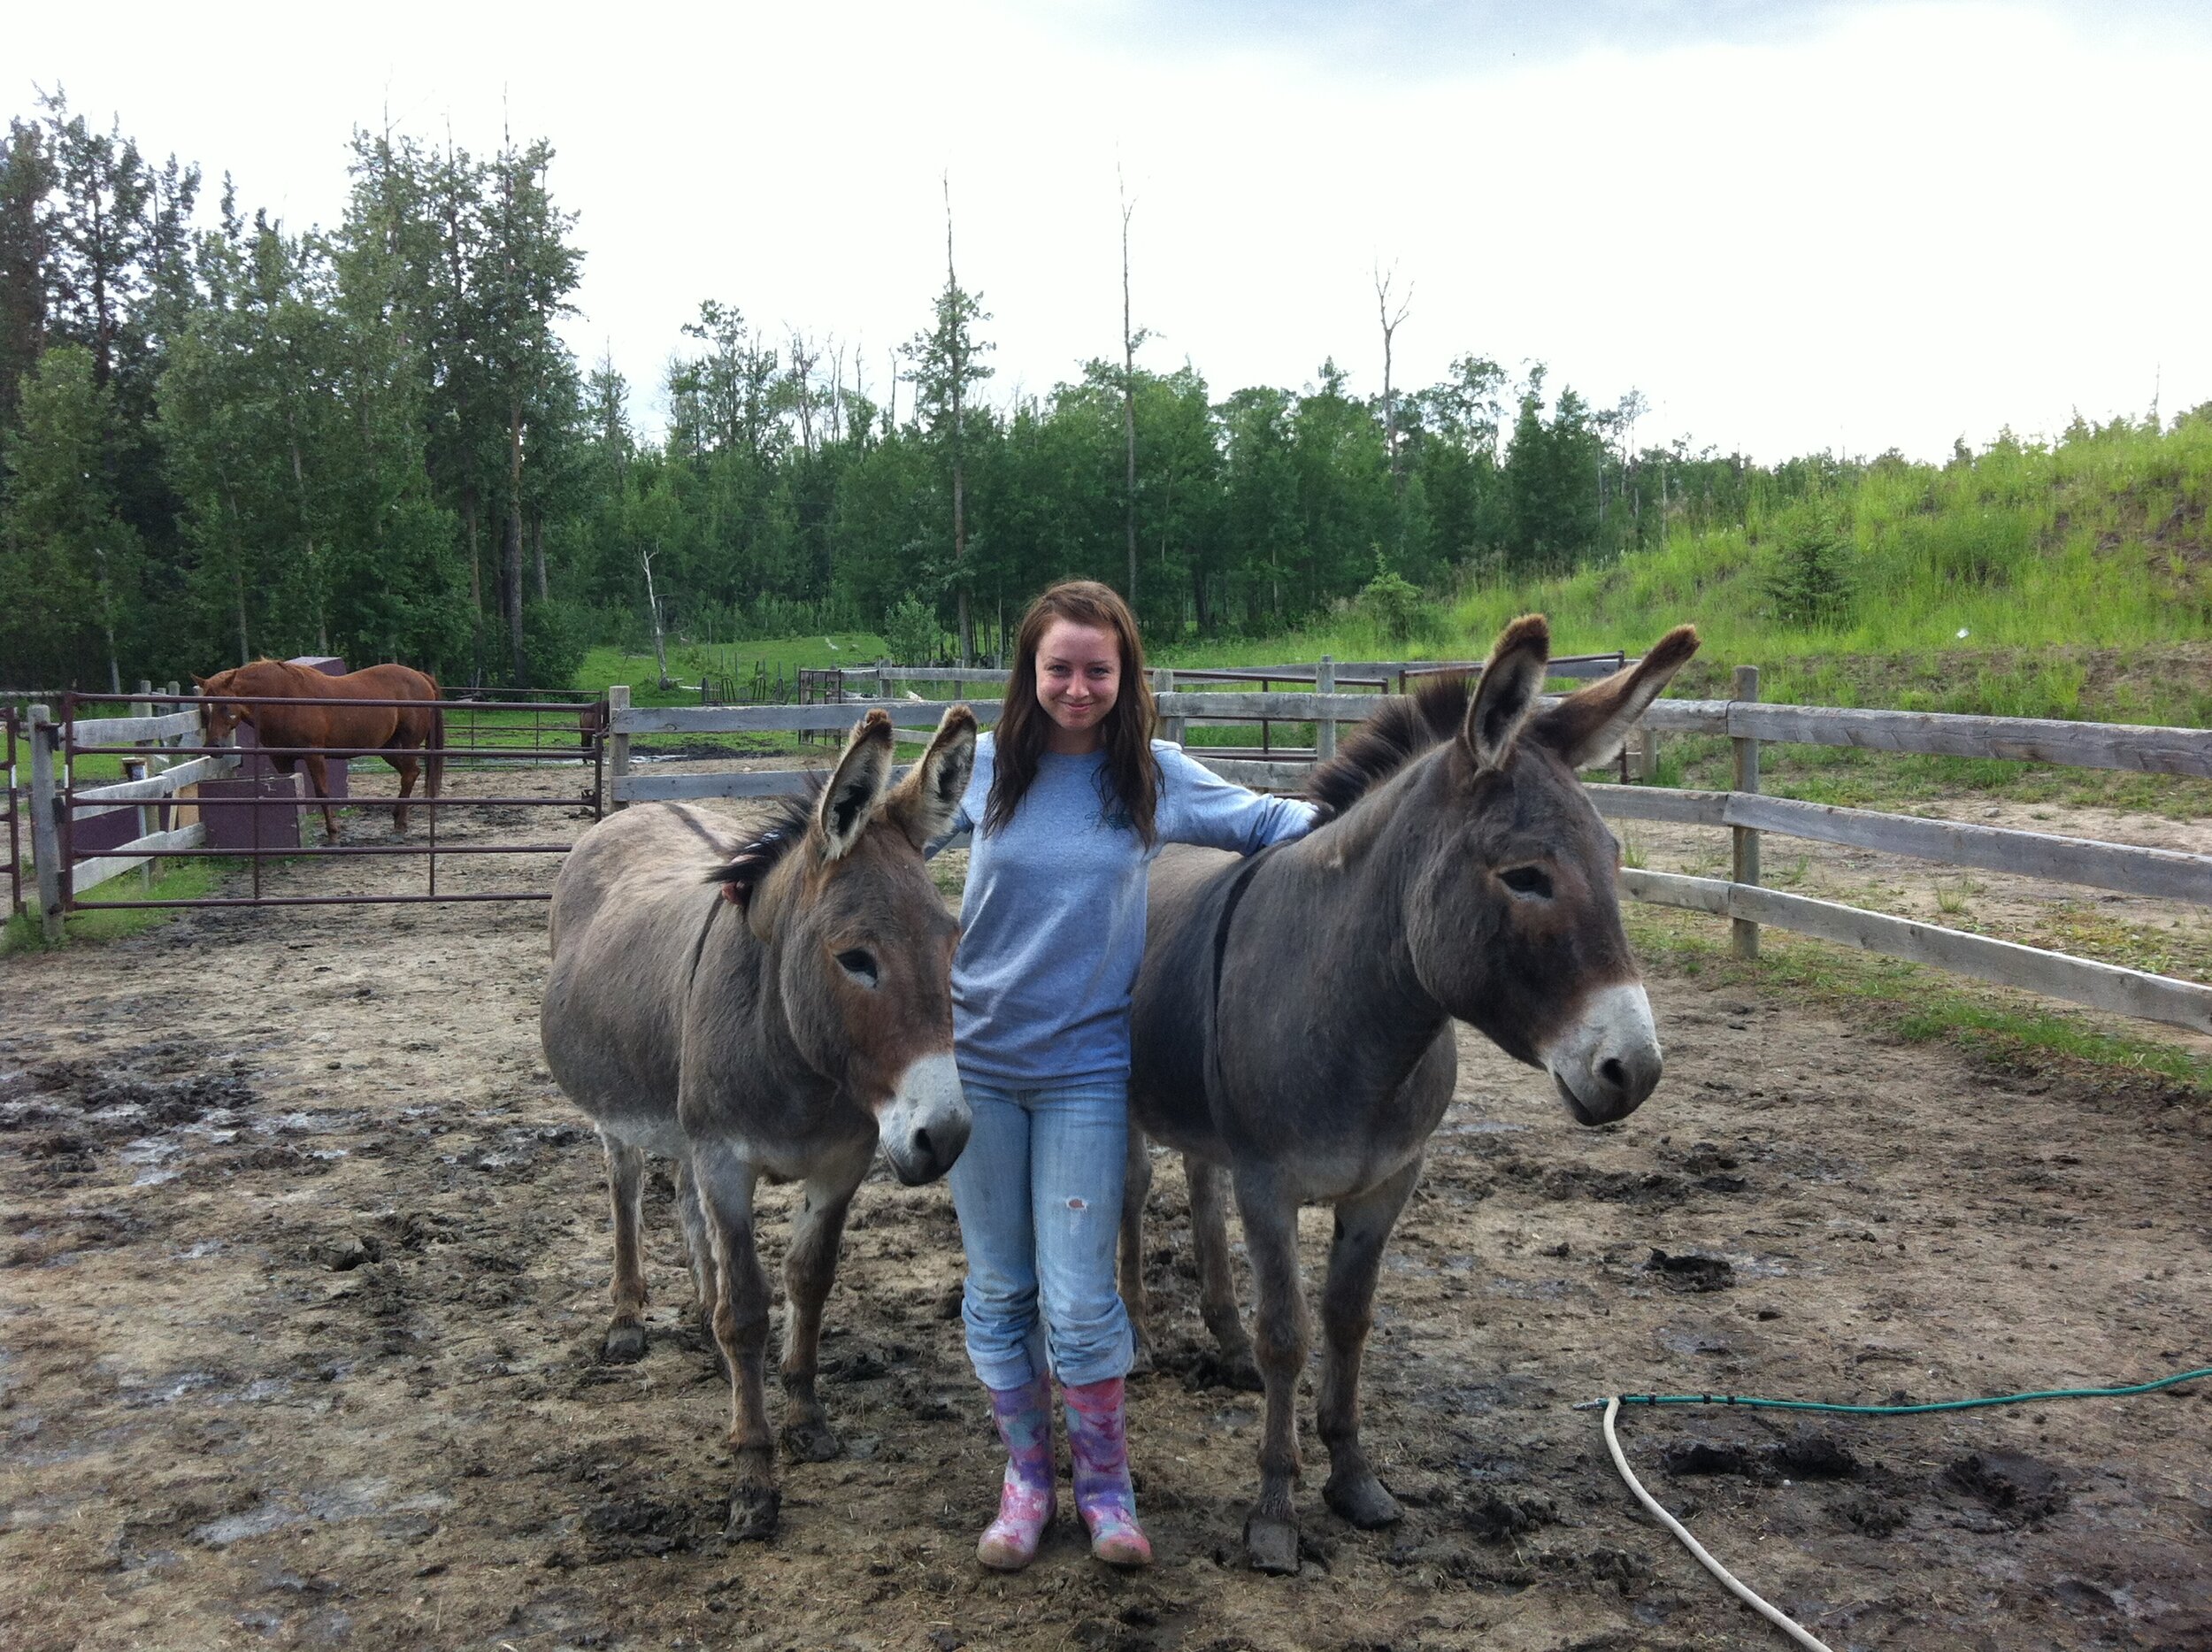 My grandpa raised donkeys too!